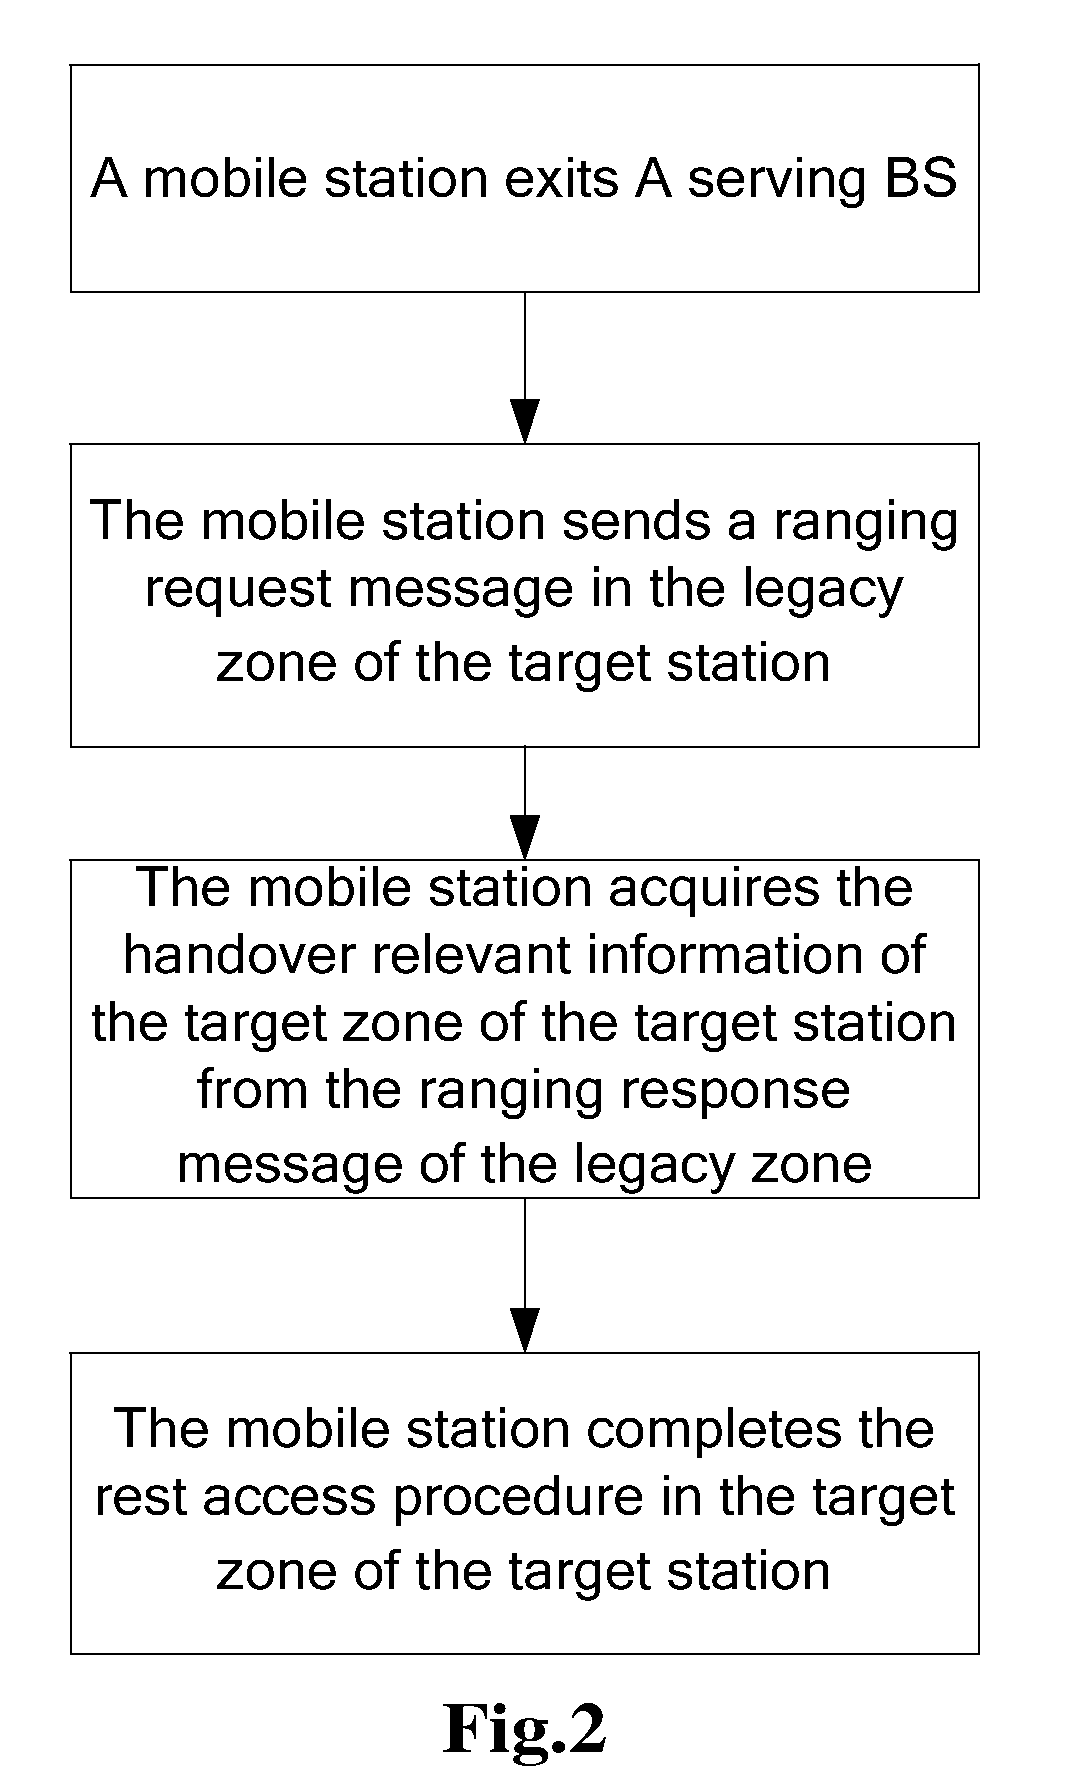 Handover method and mobile station